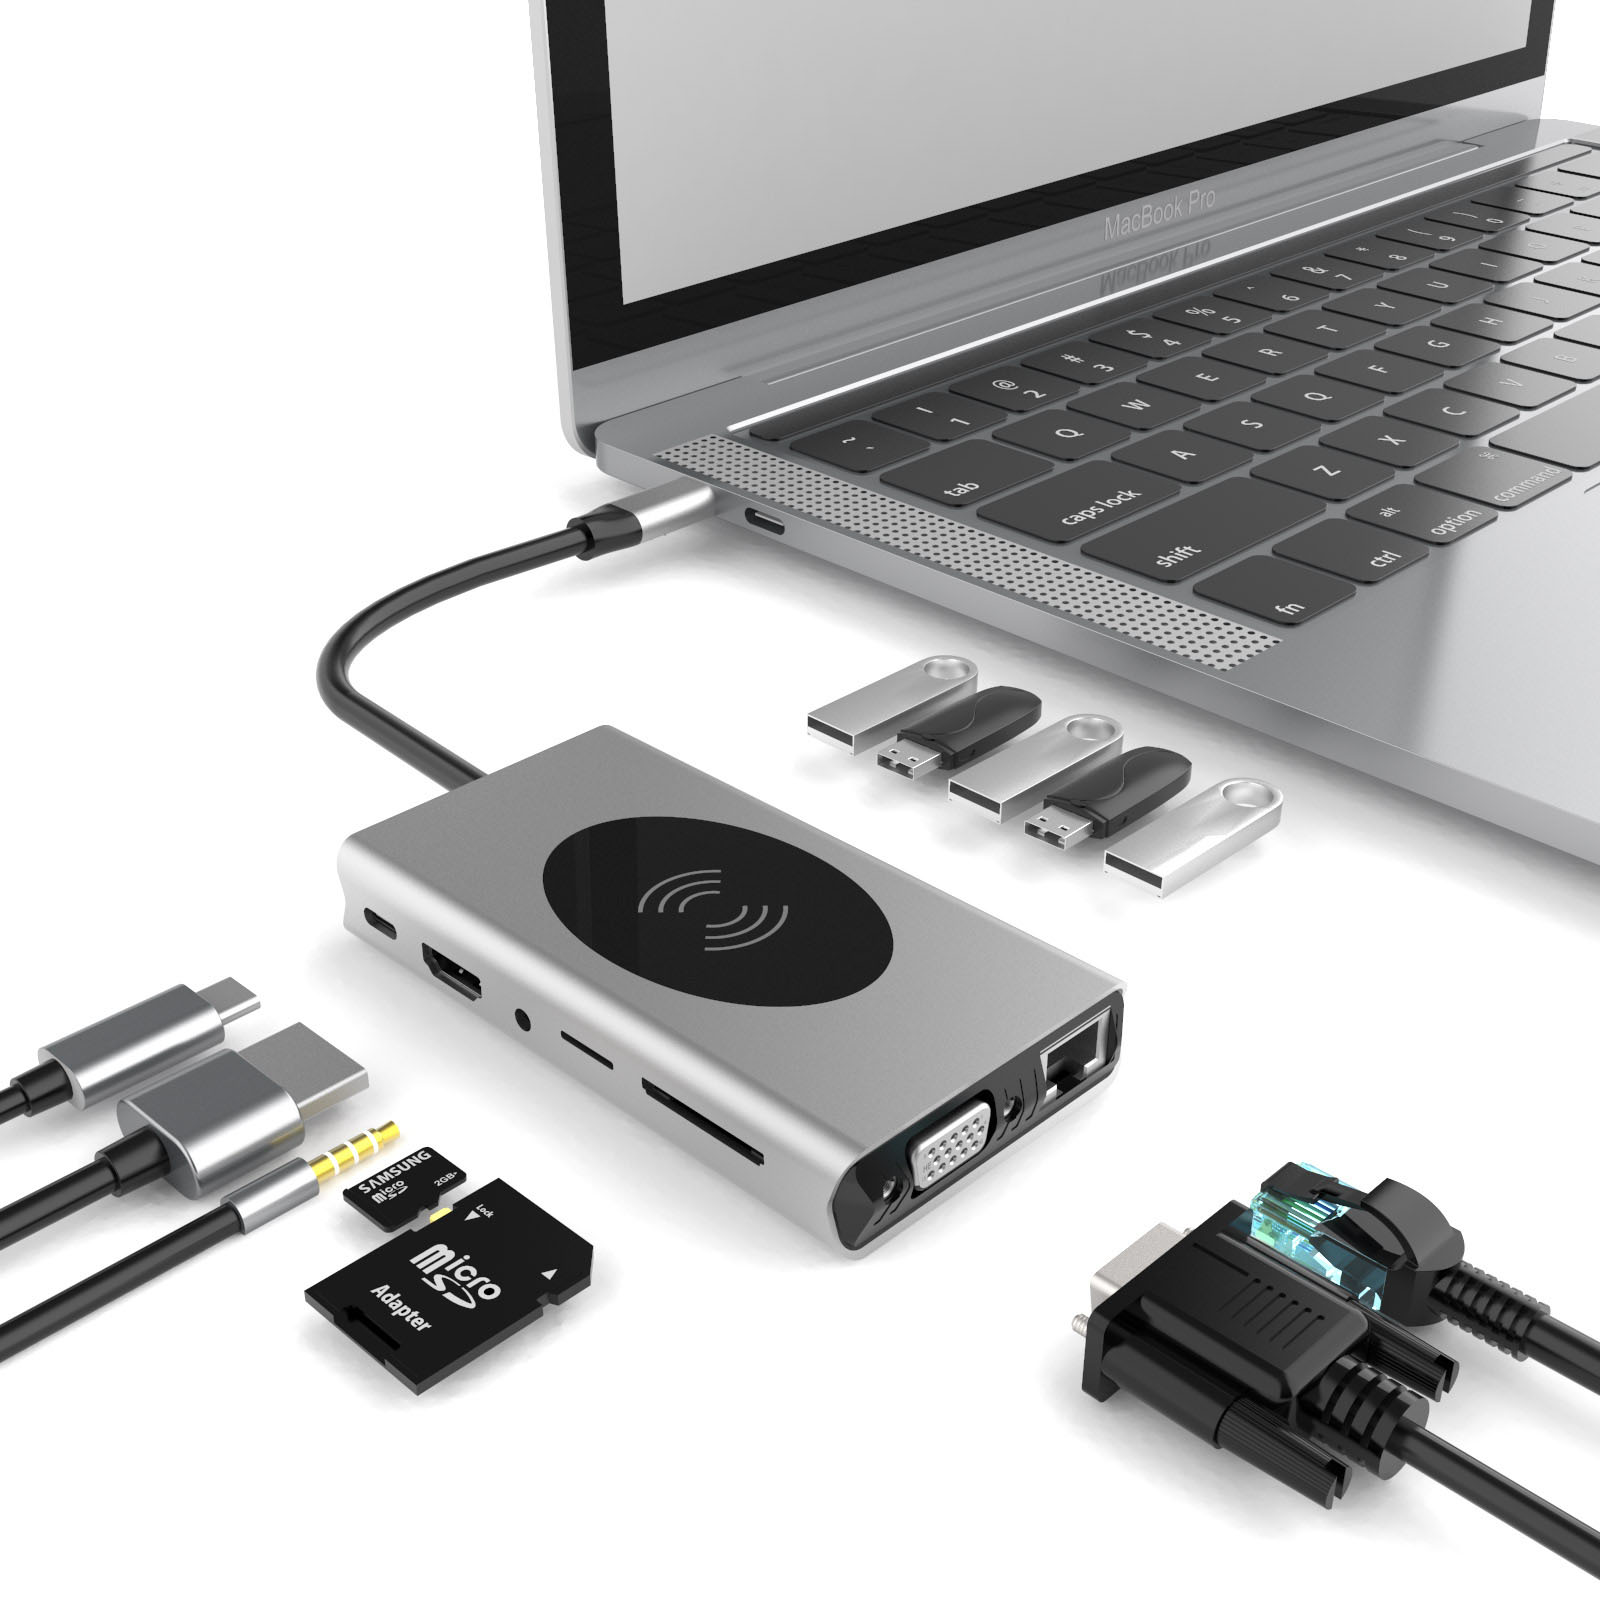 Type-C to HDMI VGA LAN 13in1 USBnu Type-C Hub USB 3.0|[g HDMI VGA SD TFJ[h[_[ 4K CX[d 3.5MMI[fBI @\ ^ MacBook ChromeBook Pixel iPhone android 